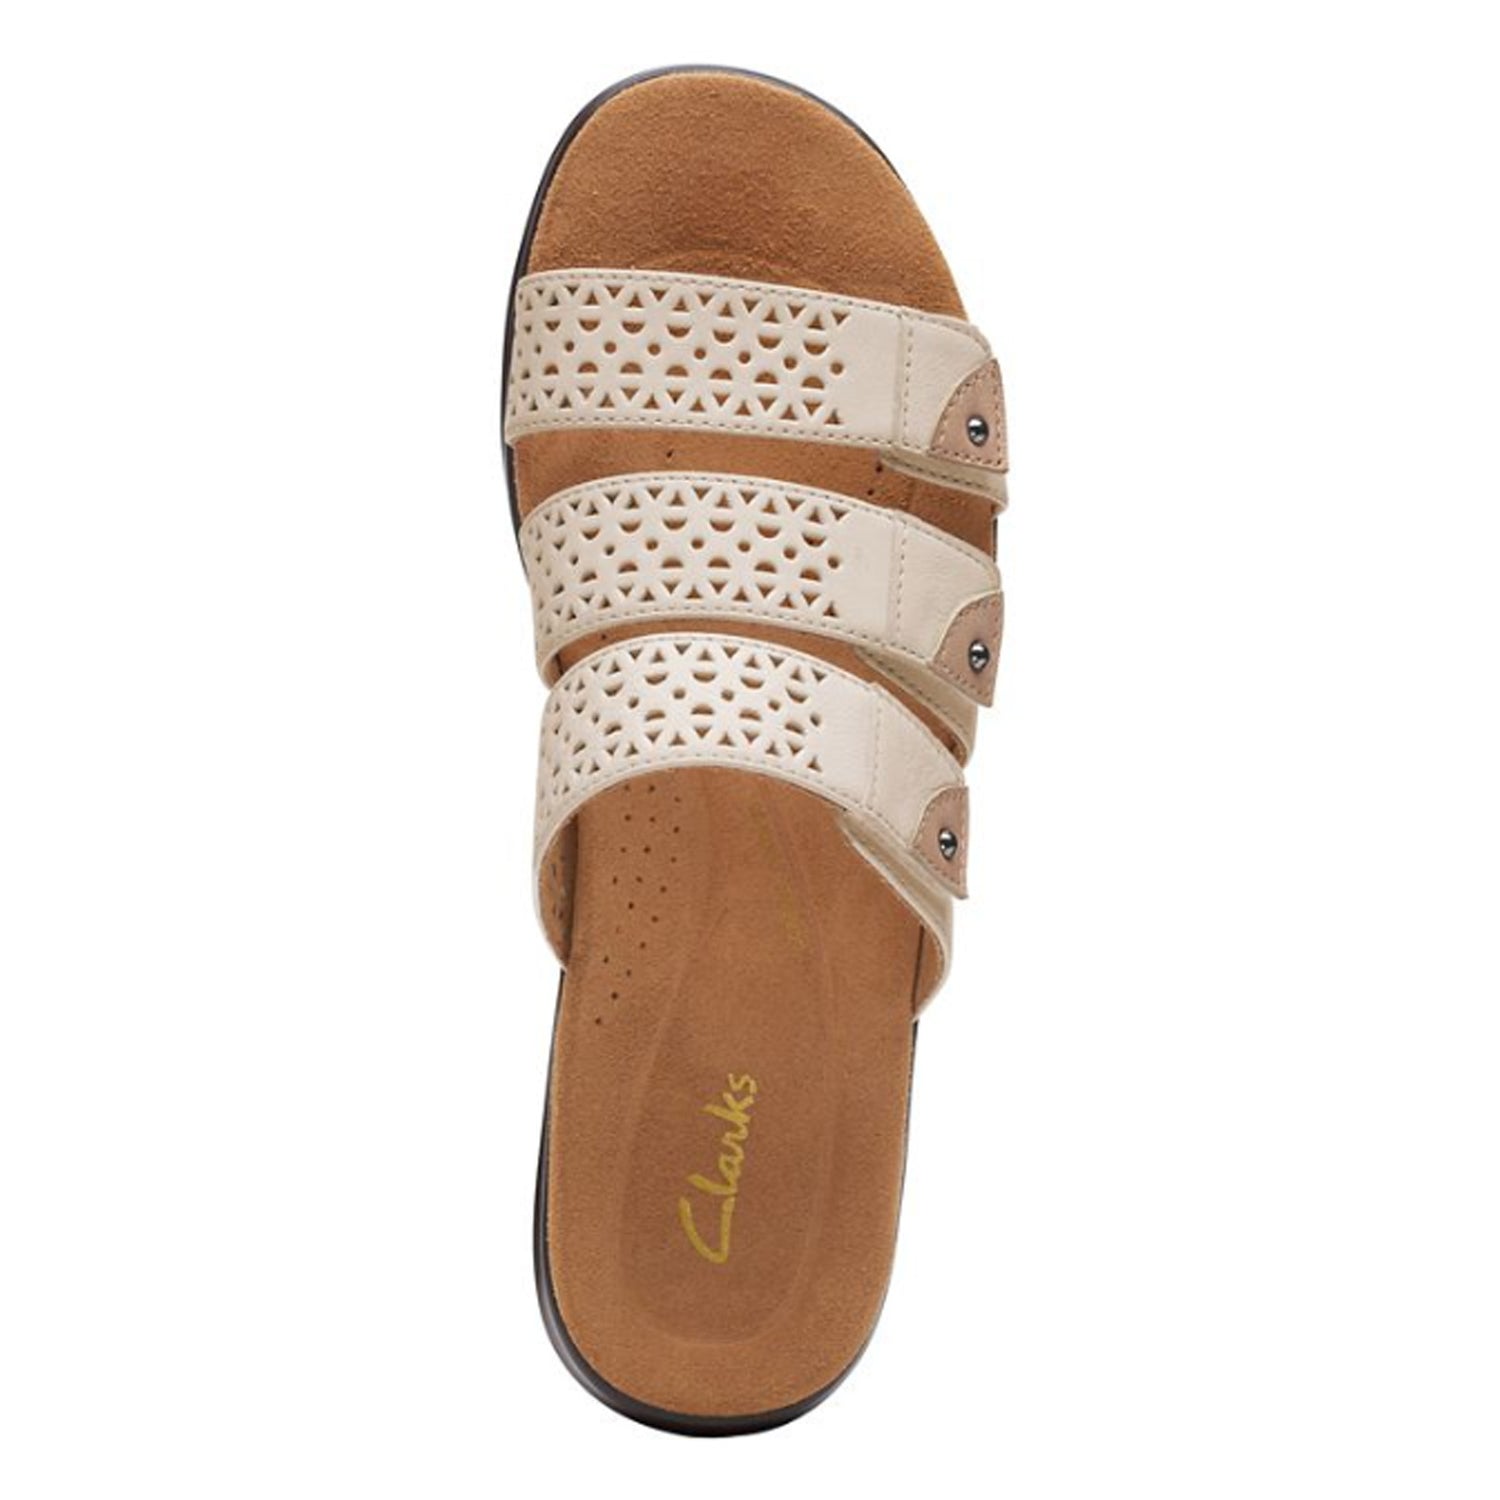 Peltz Shoes  Women's Clarks Kilty Walk Sandal WHITE 26172148